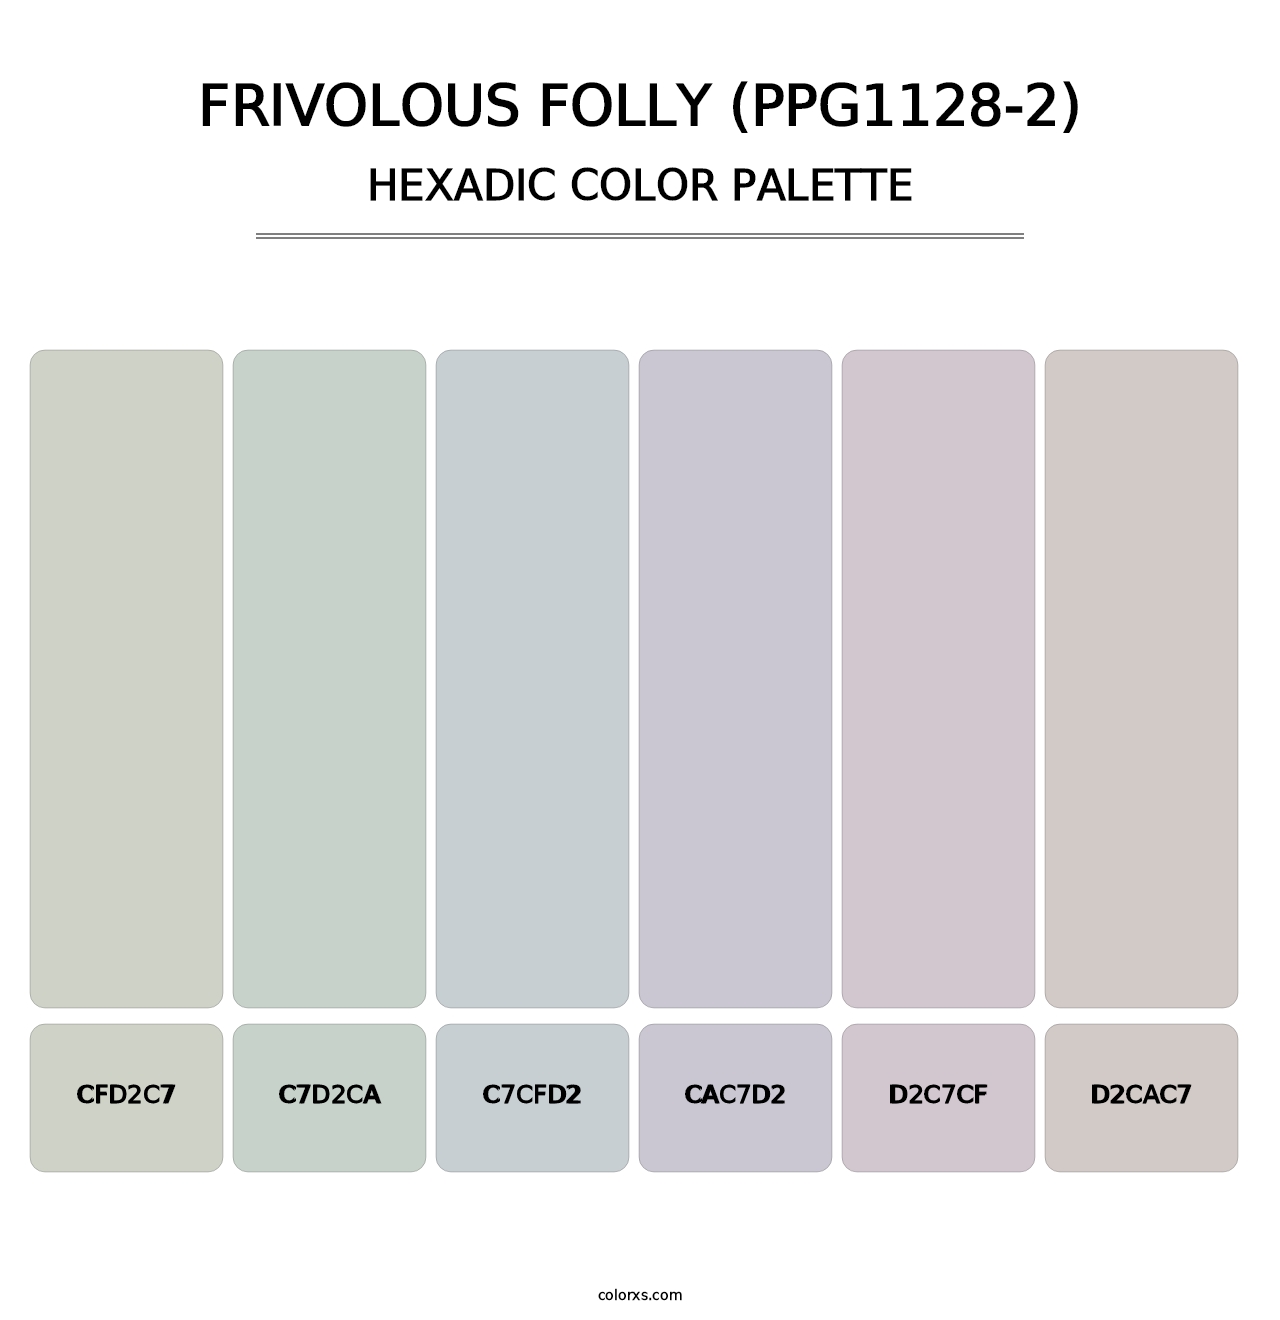 Frivolous Folly (PPG1128-2) - Hexadic Color Palette